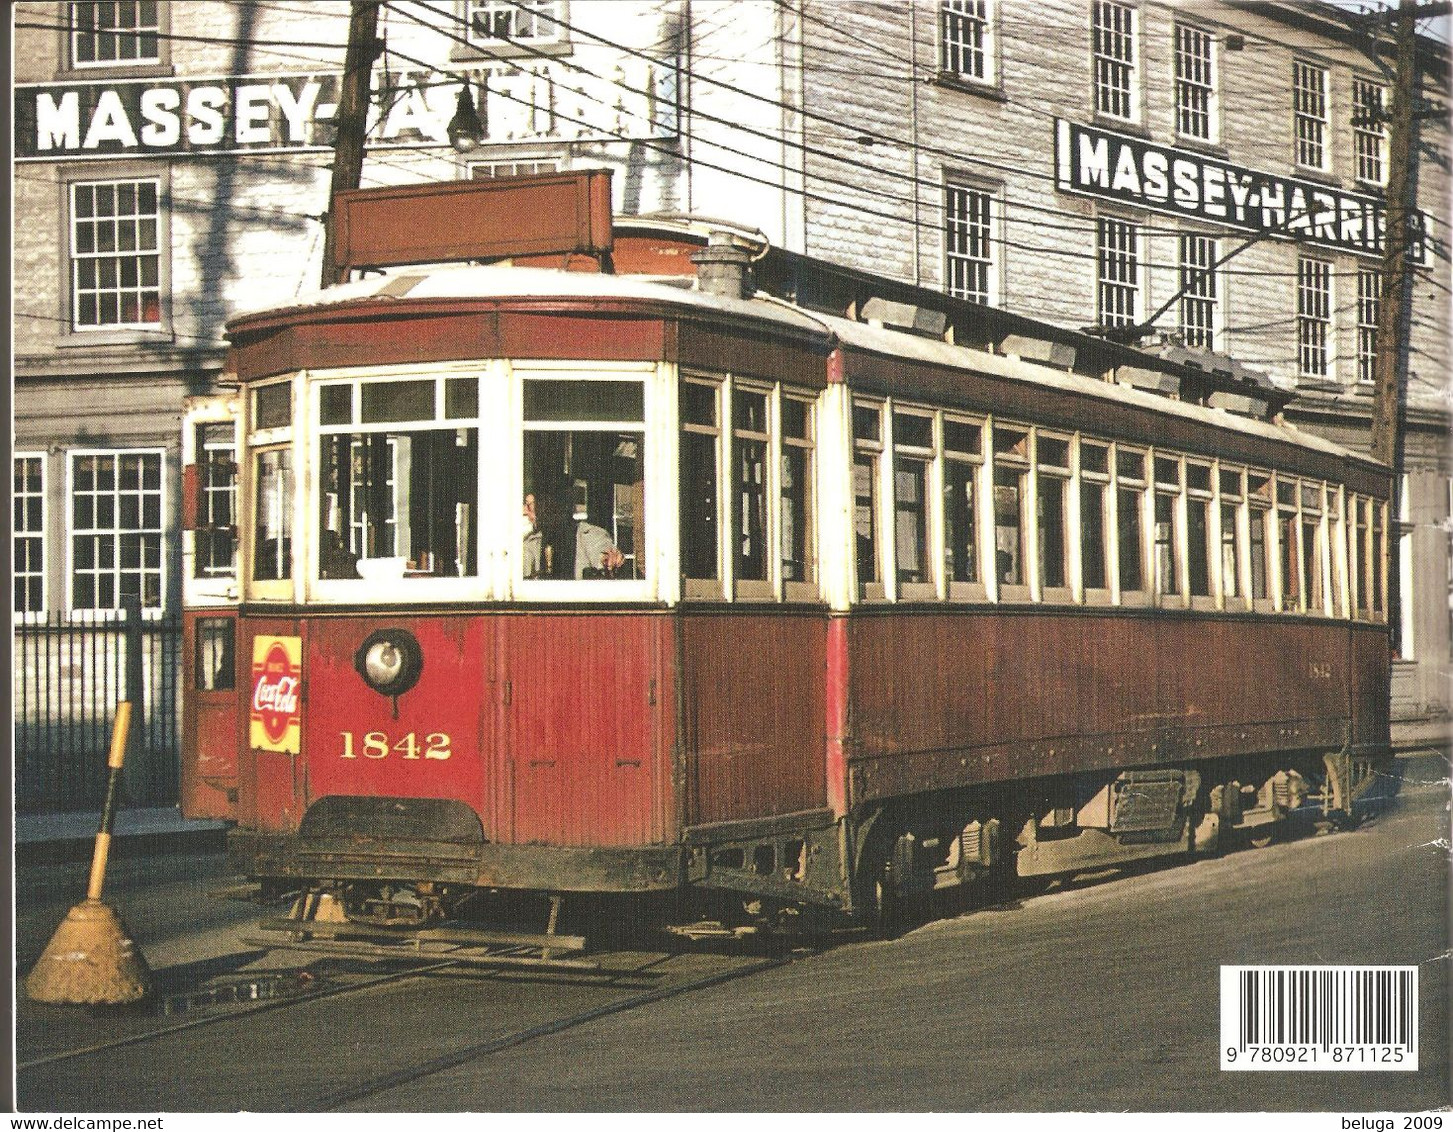 Quebec Railway Light & Power Company  Vol 2  Citadel Division Book By Grumley Tramways Canada - ISBN 9780921871125 - Canada